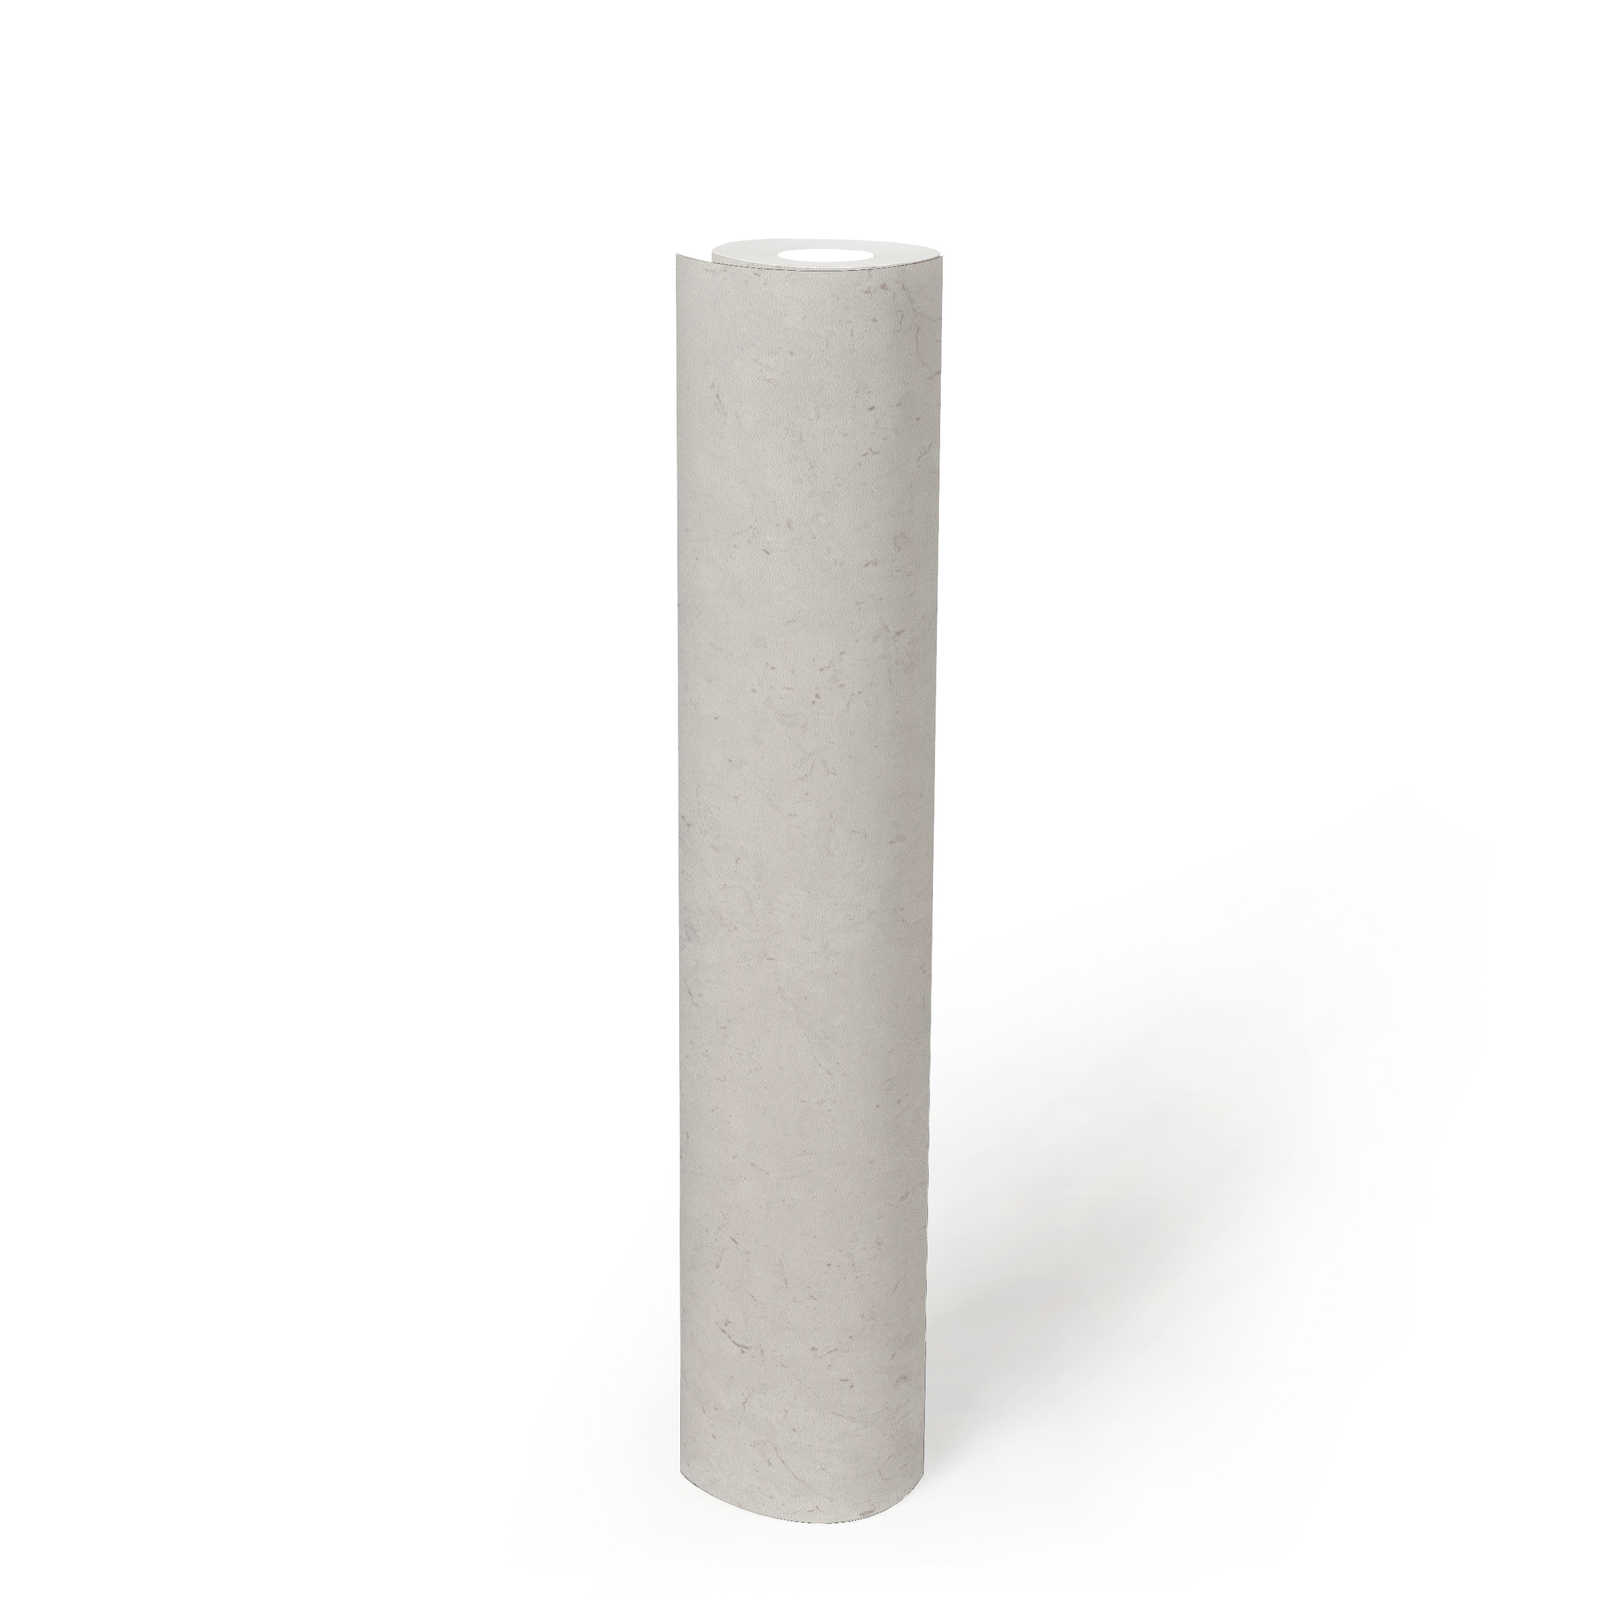             Non-woven wallpaper plain with concrete look - grey, white
        